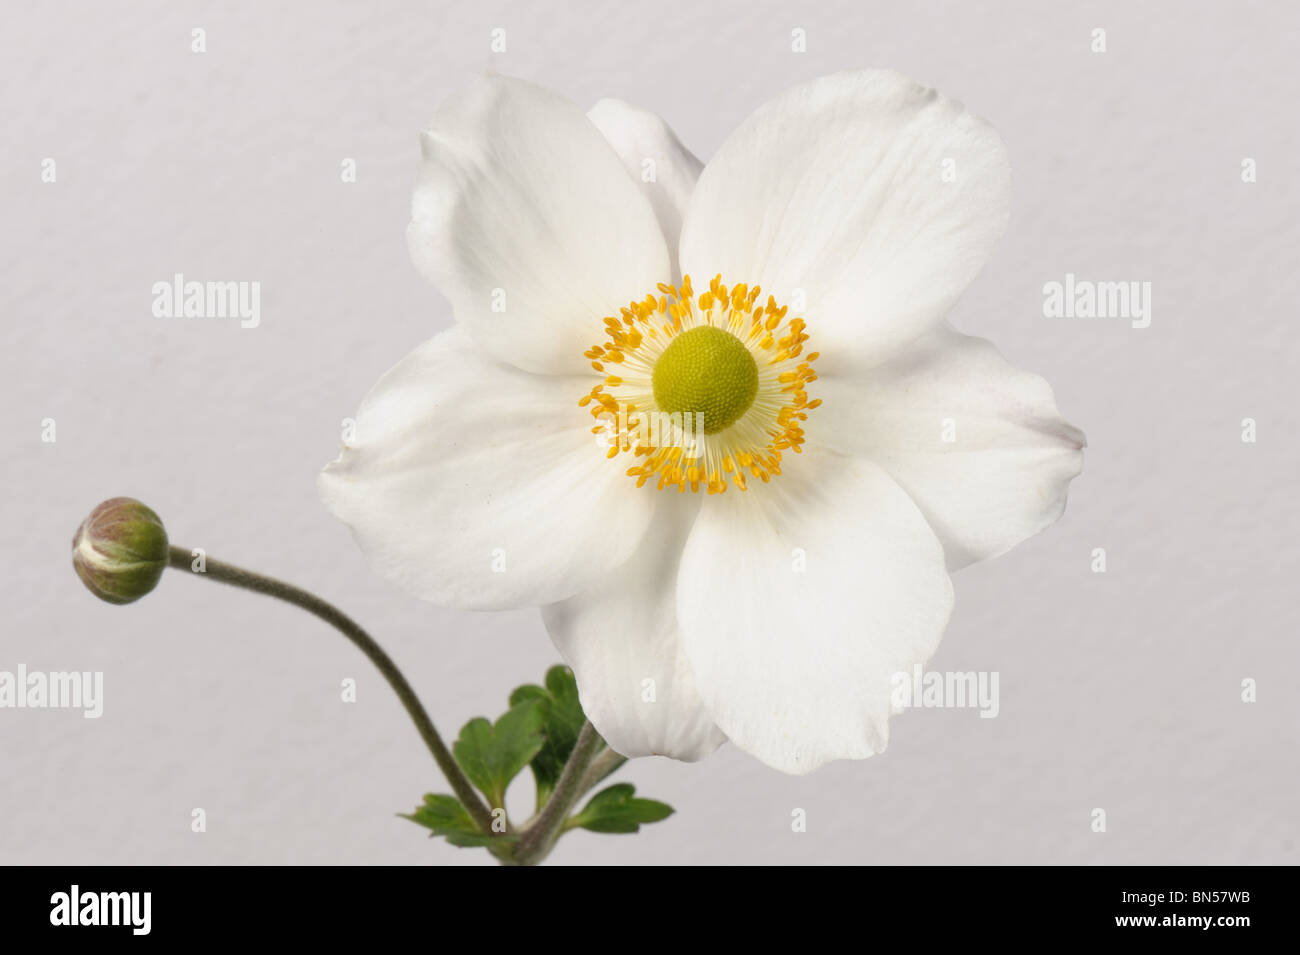 Anemone x hybrida 'Honorine Jobert' flower against a white background Stock Photo